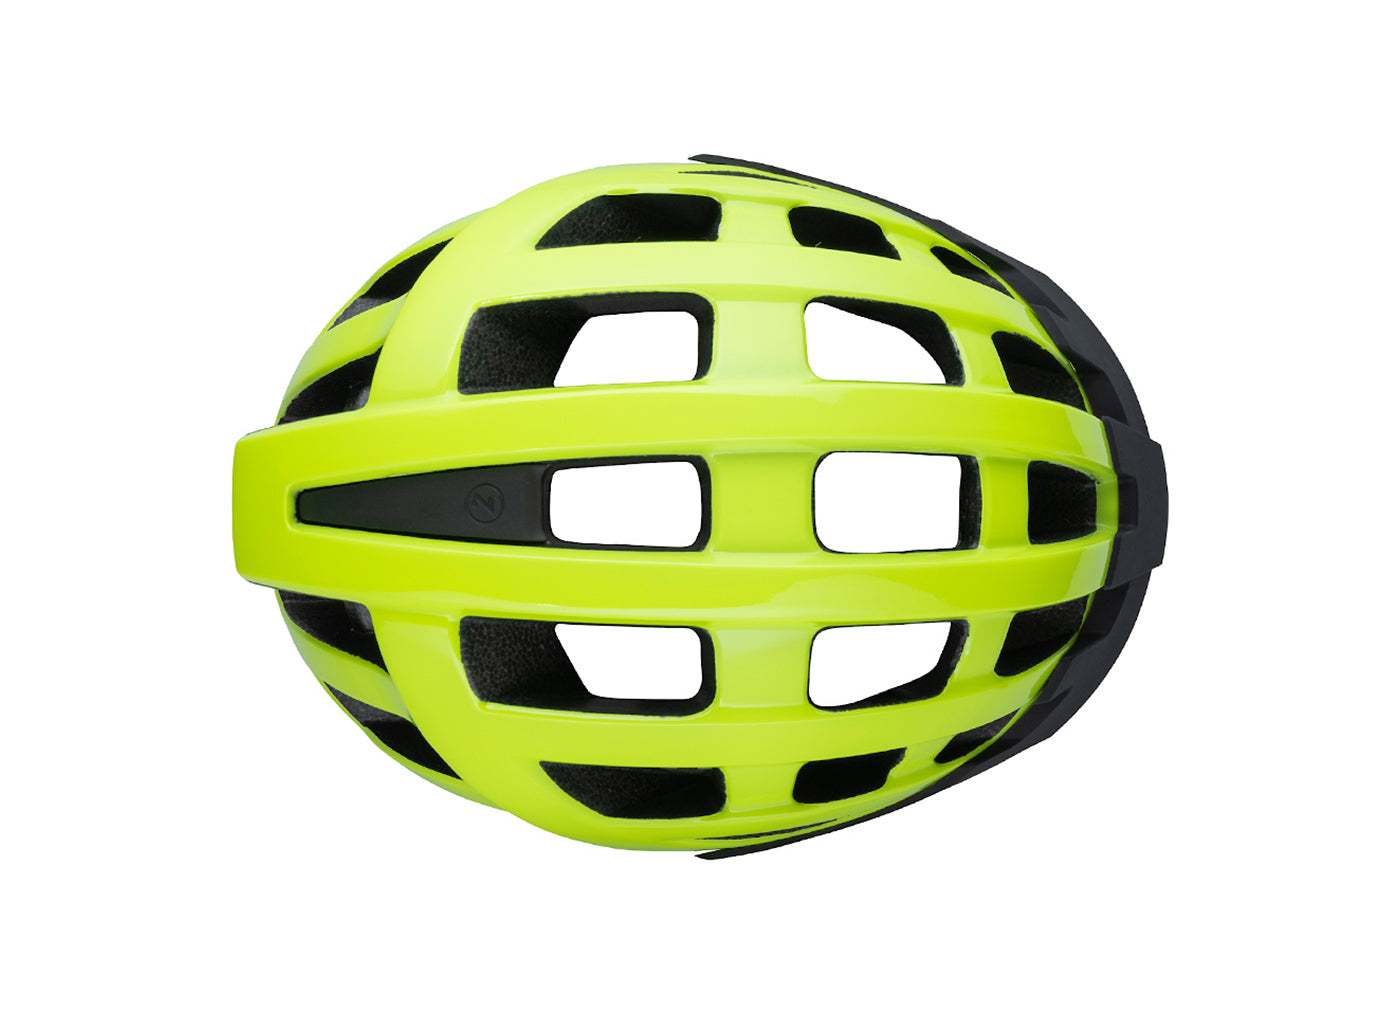 Lazer Helmet Compact Flash Yellow